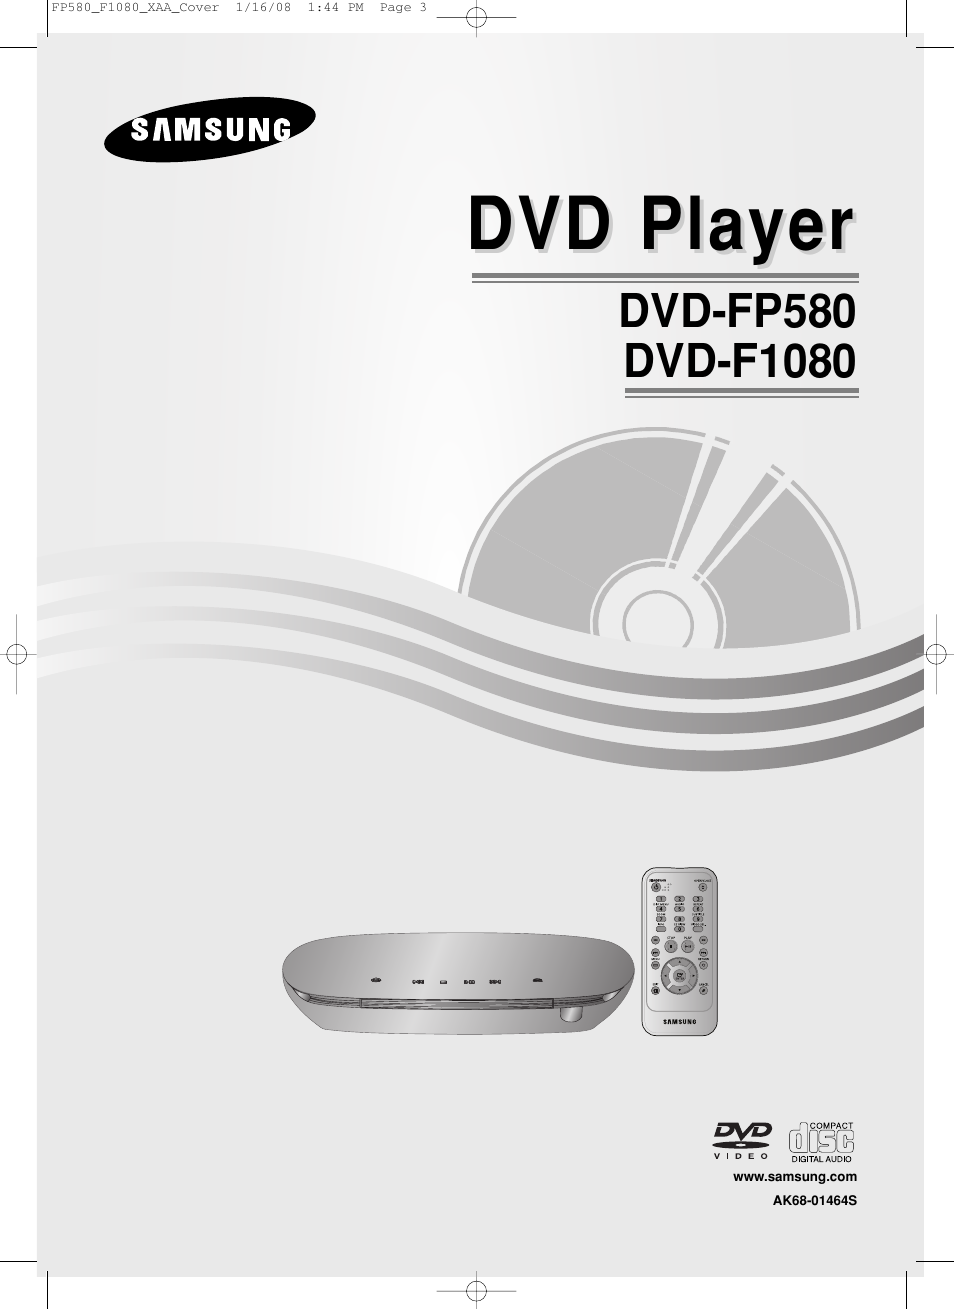 Samsung DVD-F1080-XAA User Manual | 63 pages